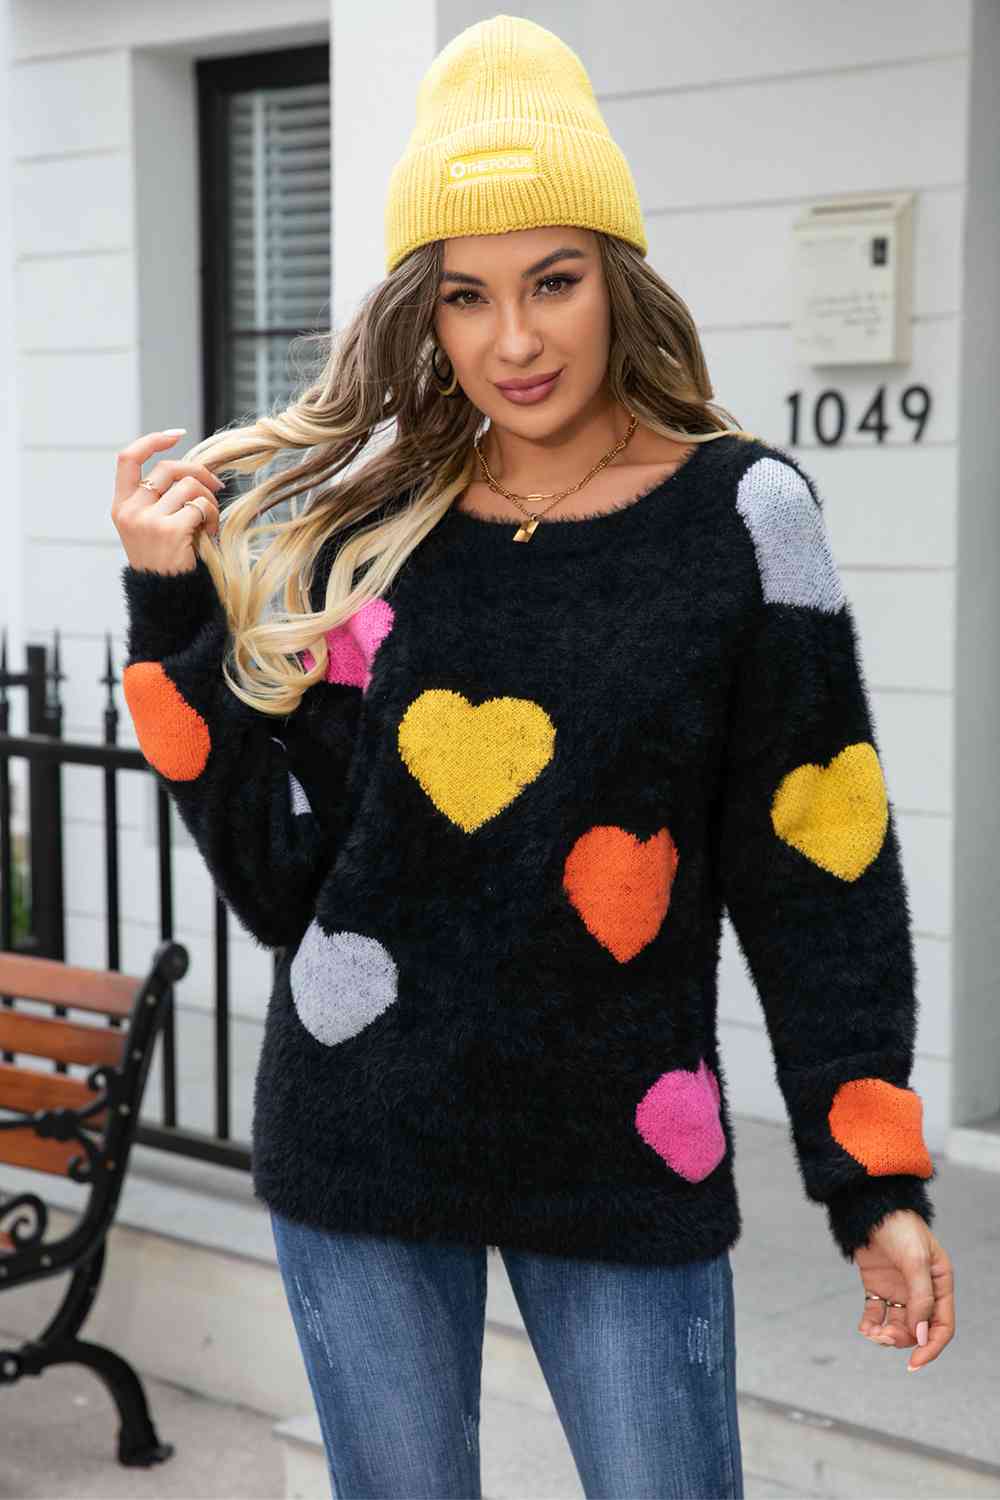 Multi Color Heart Print Sweater - Global Village Kailua Boutique